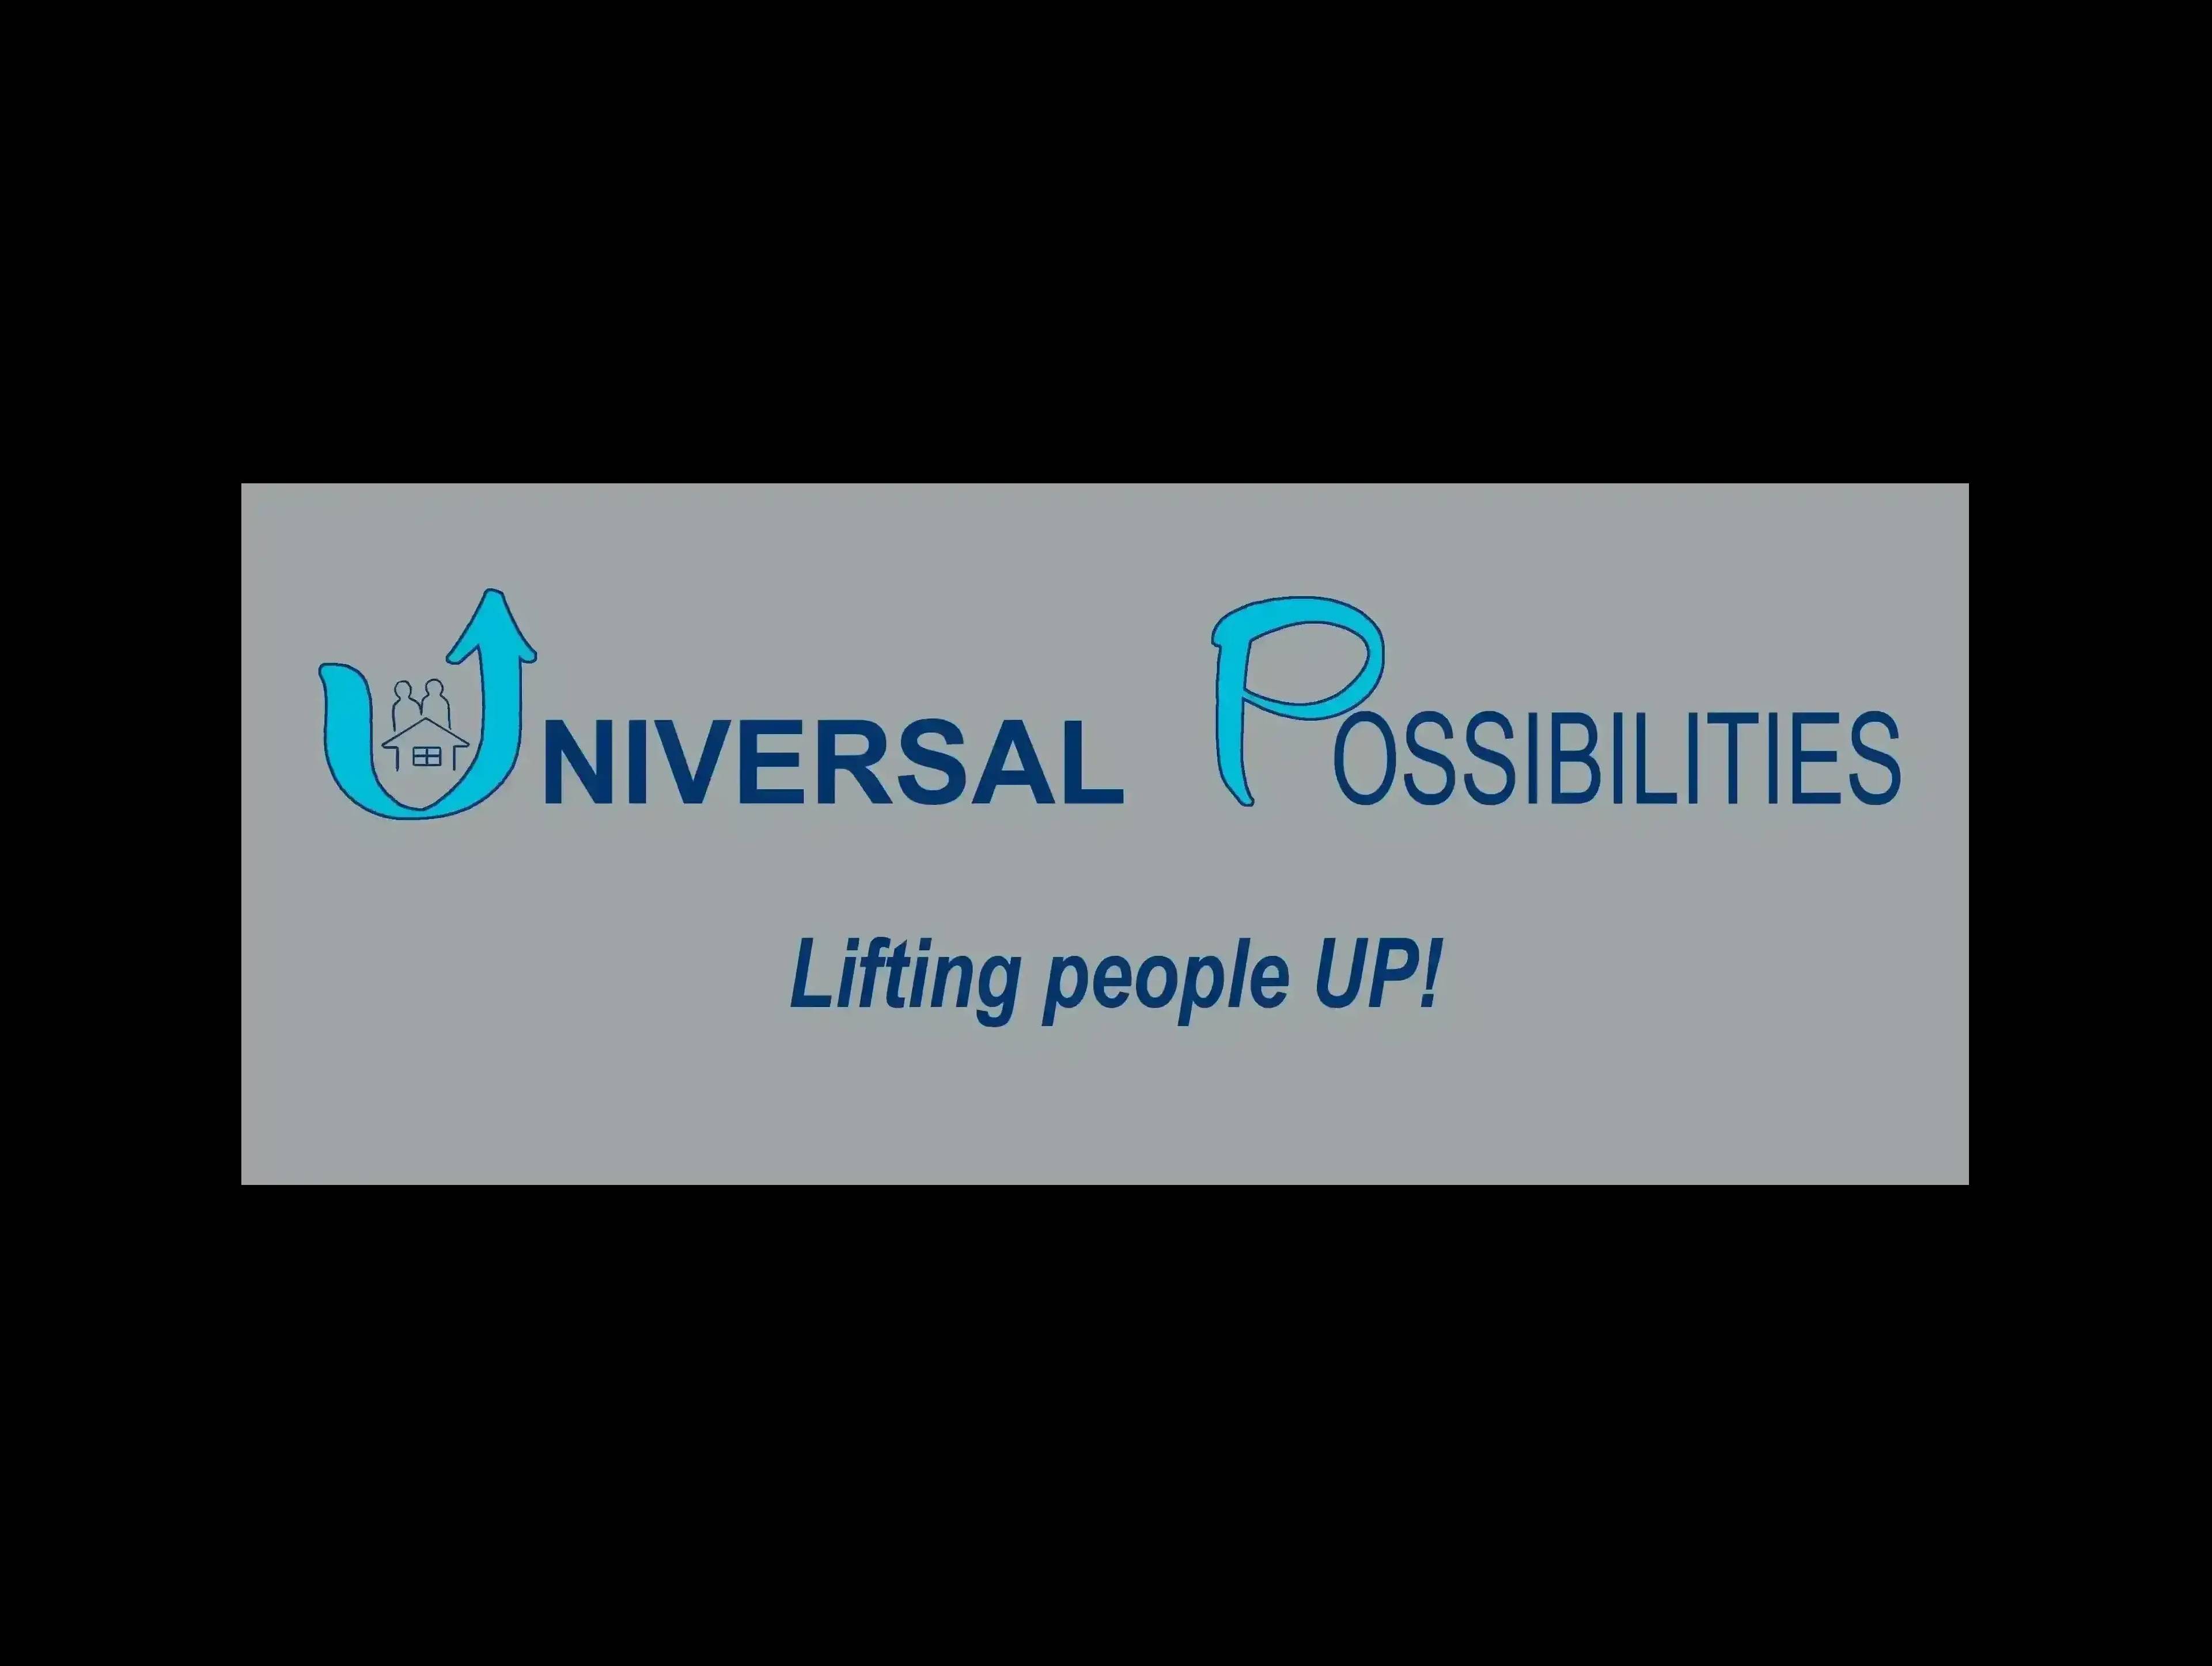 Universal Possibilities